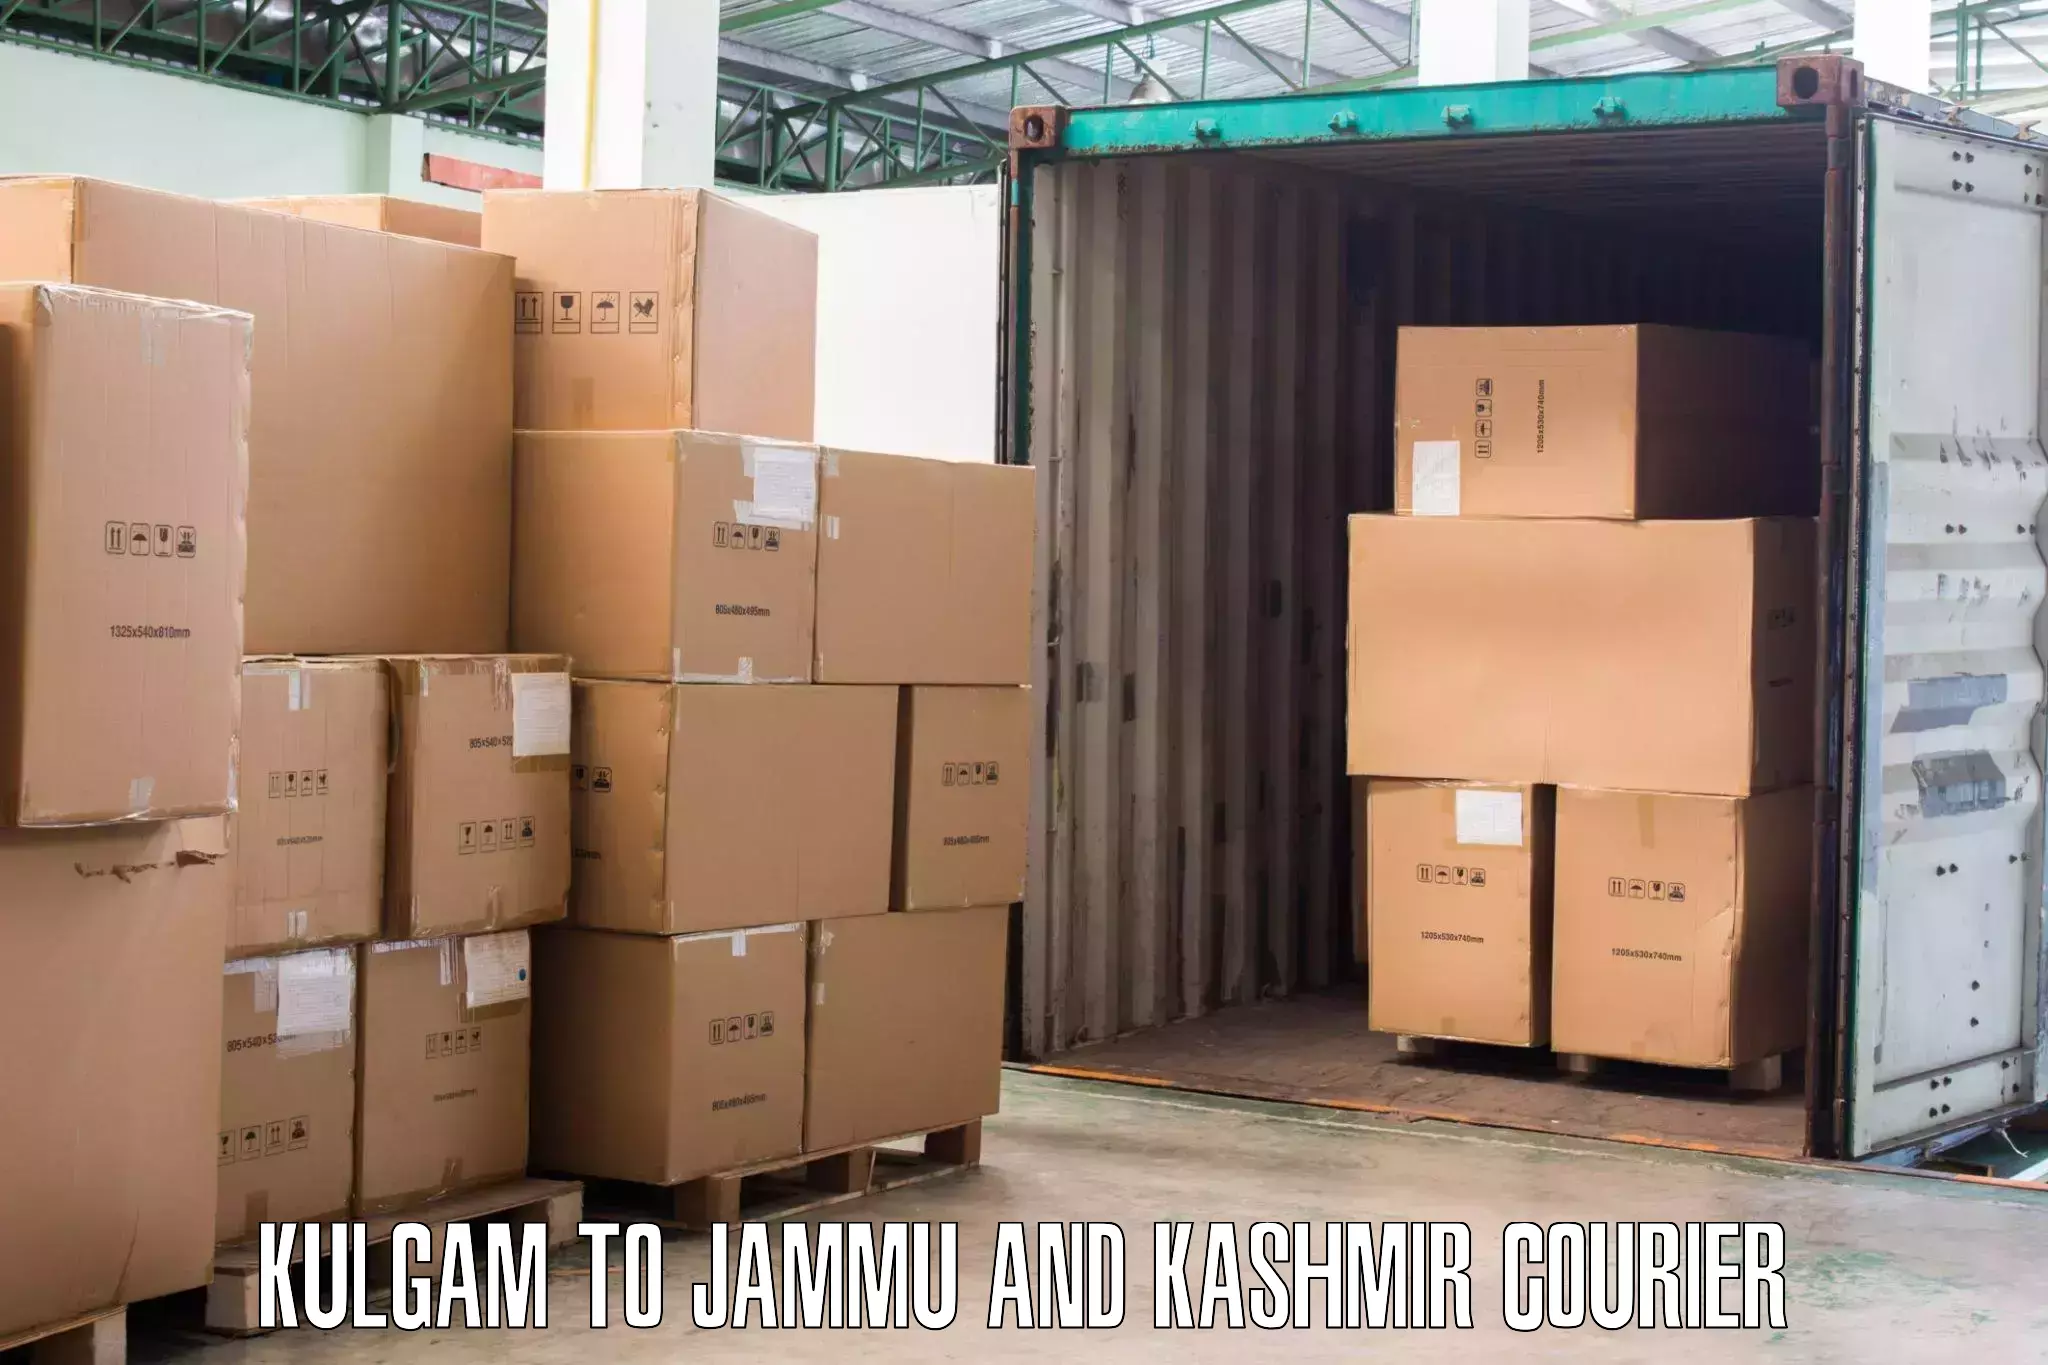 Trusted relocation experts Kulgam to IIT Jammu